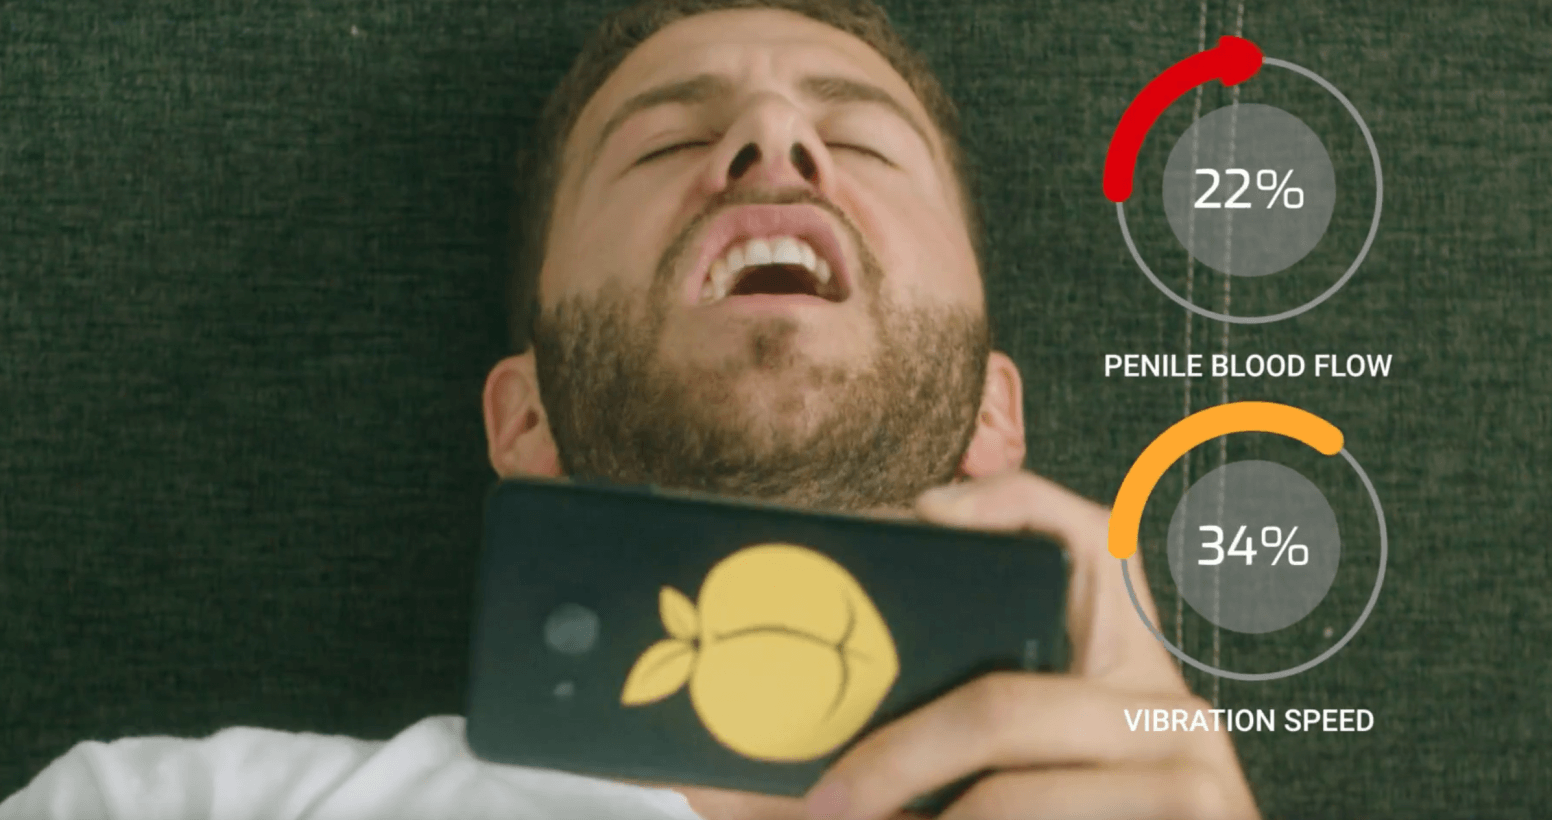 Company Brazzers - Brazzers's imaginary smartphone turns porn videos into holograms